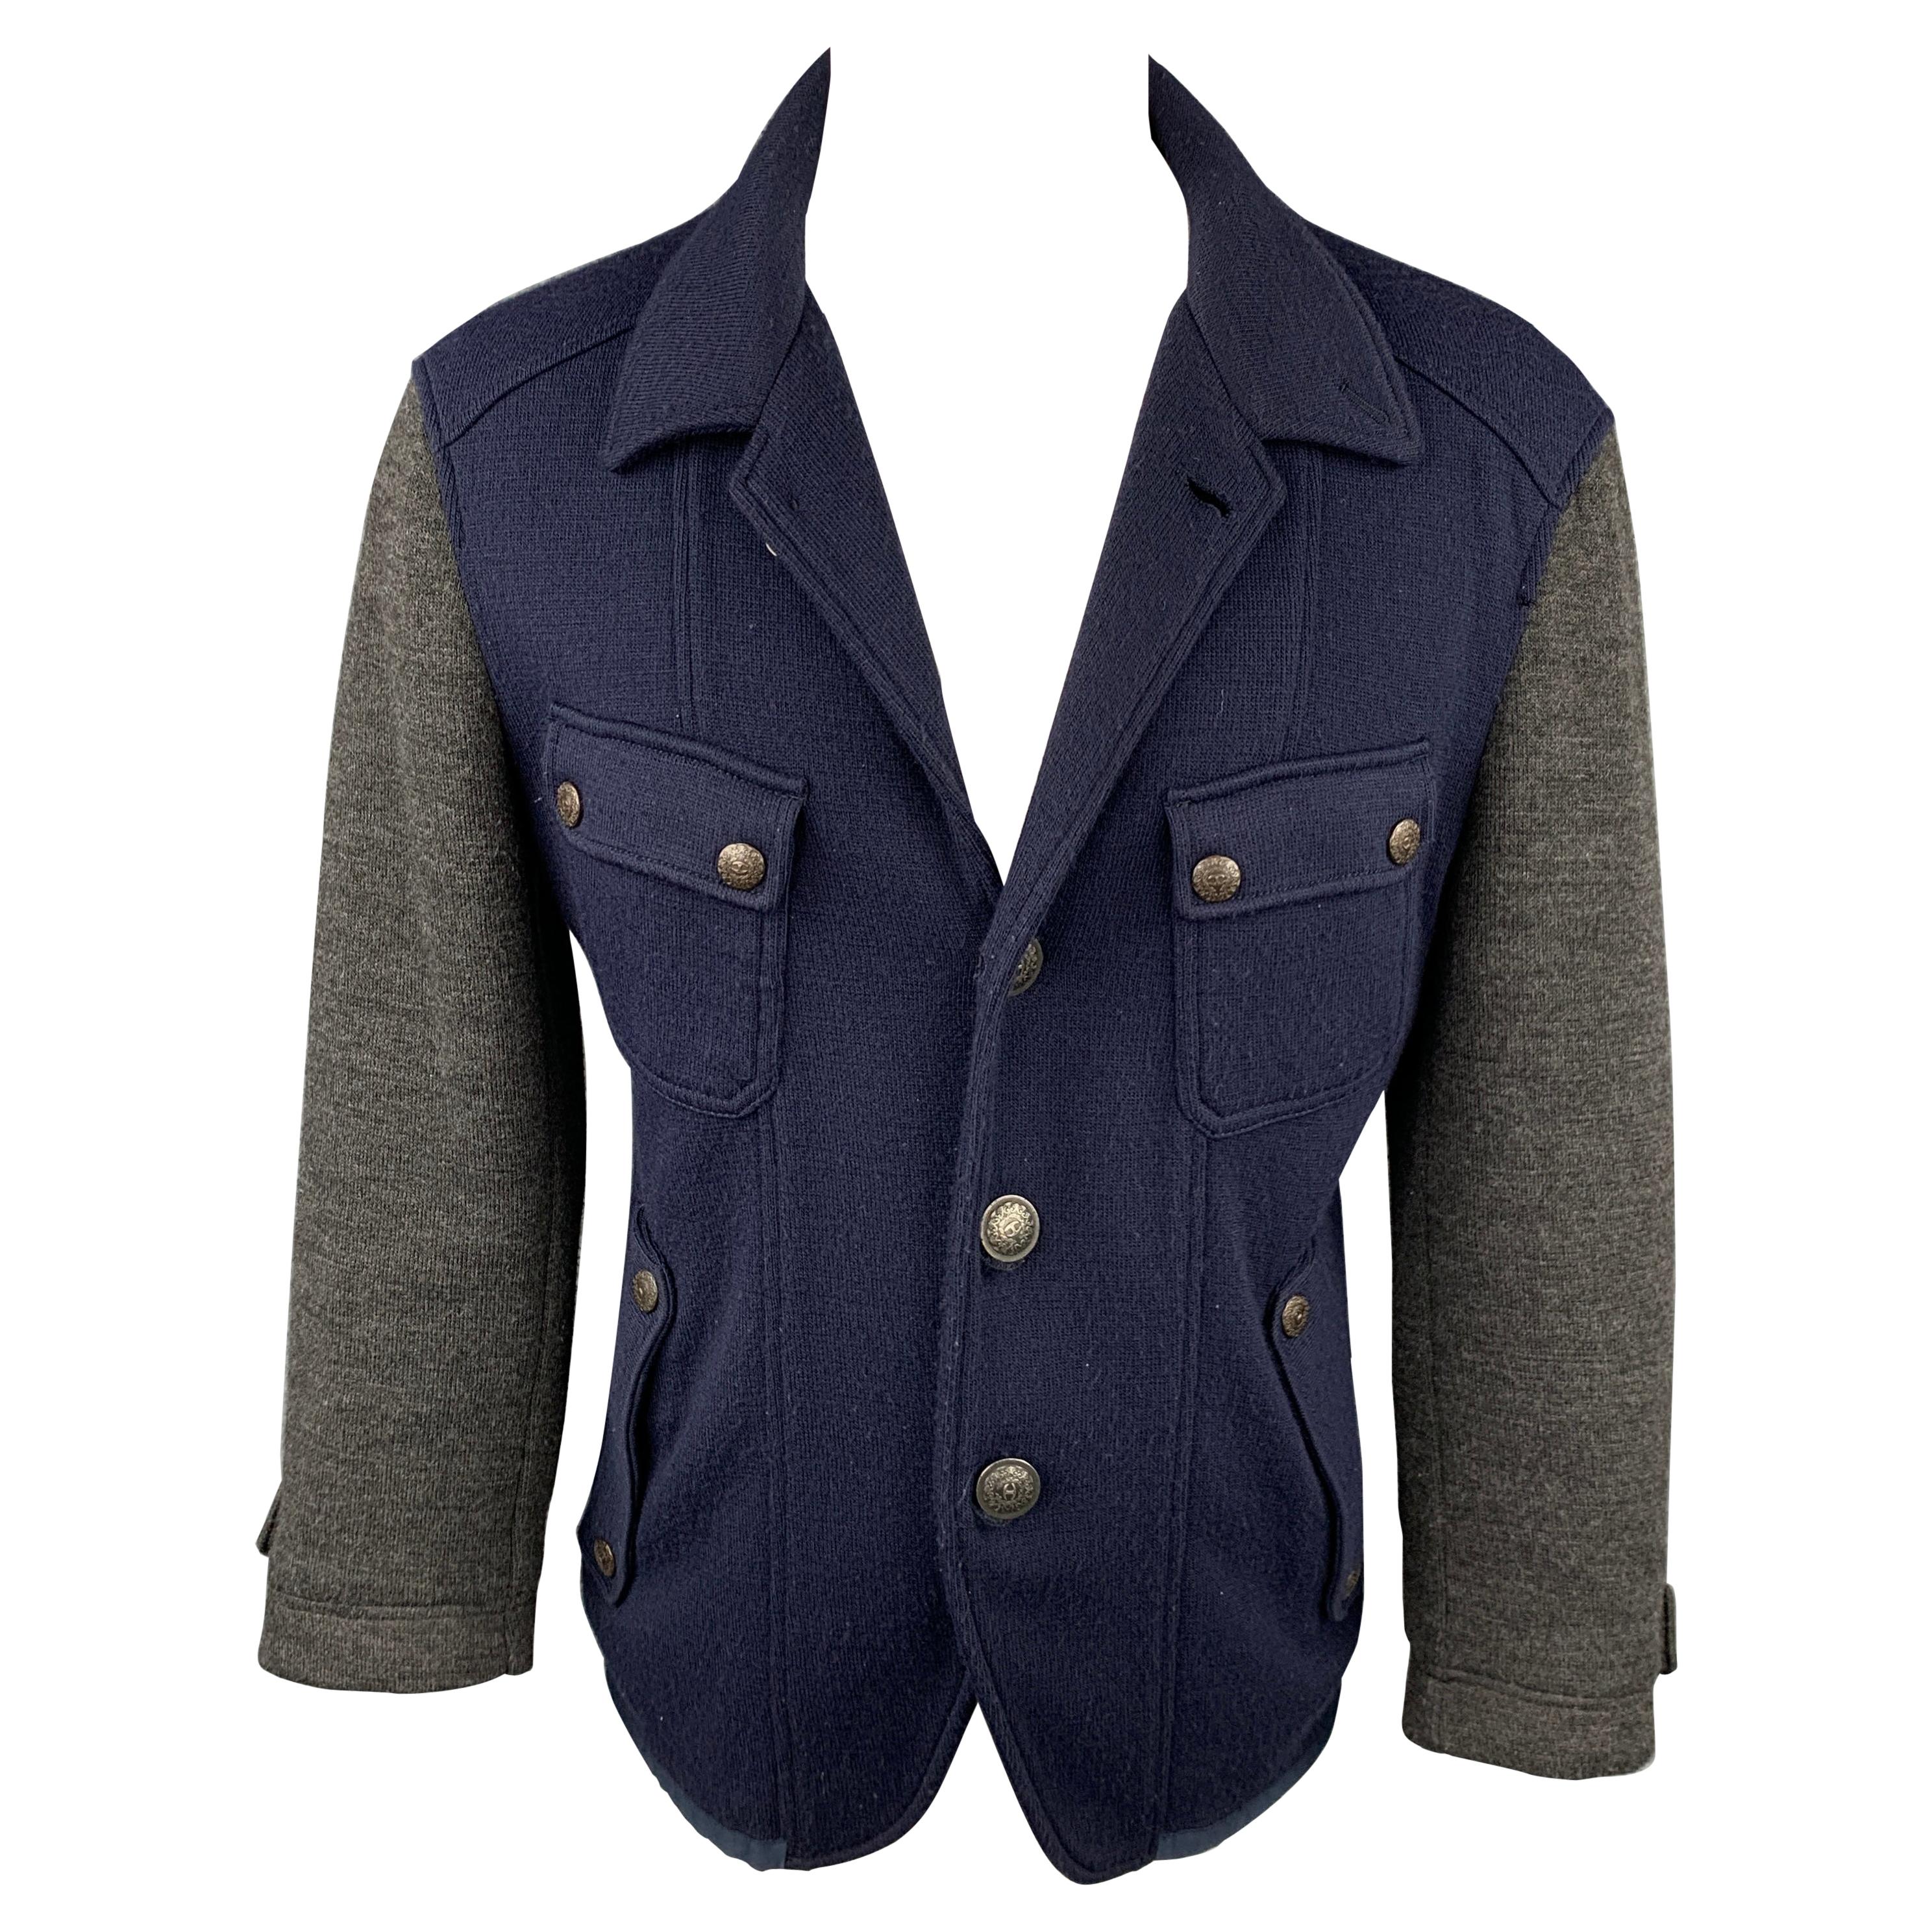 JUST CAVALLI Size L Navy & Grey Color Block Knit Jacket